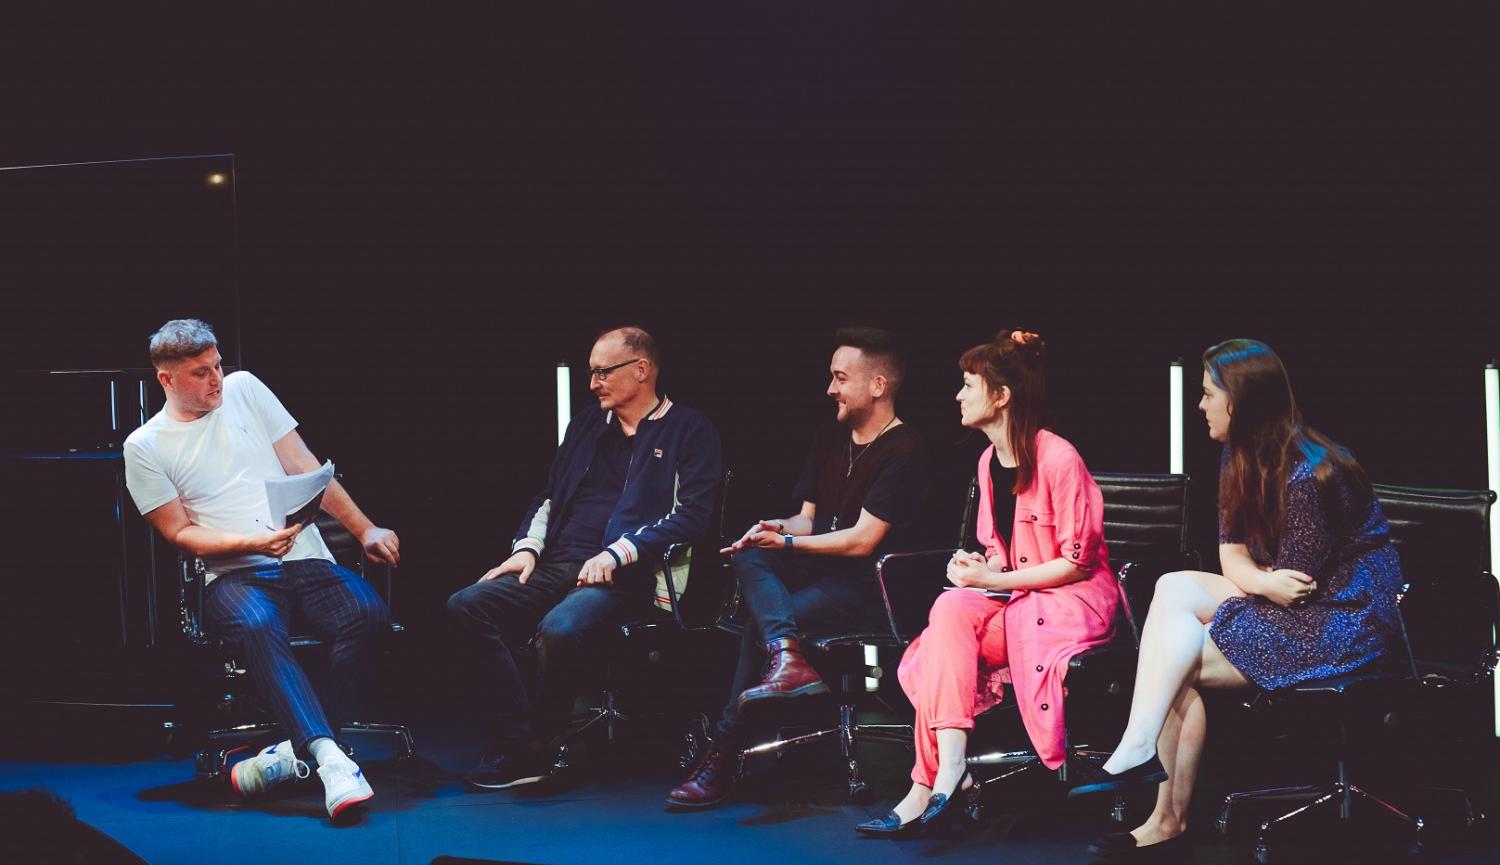 Panel of 5 people on stage